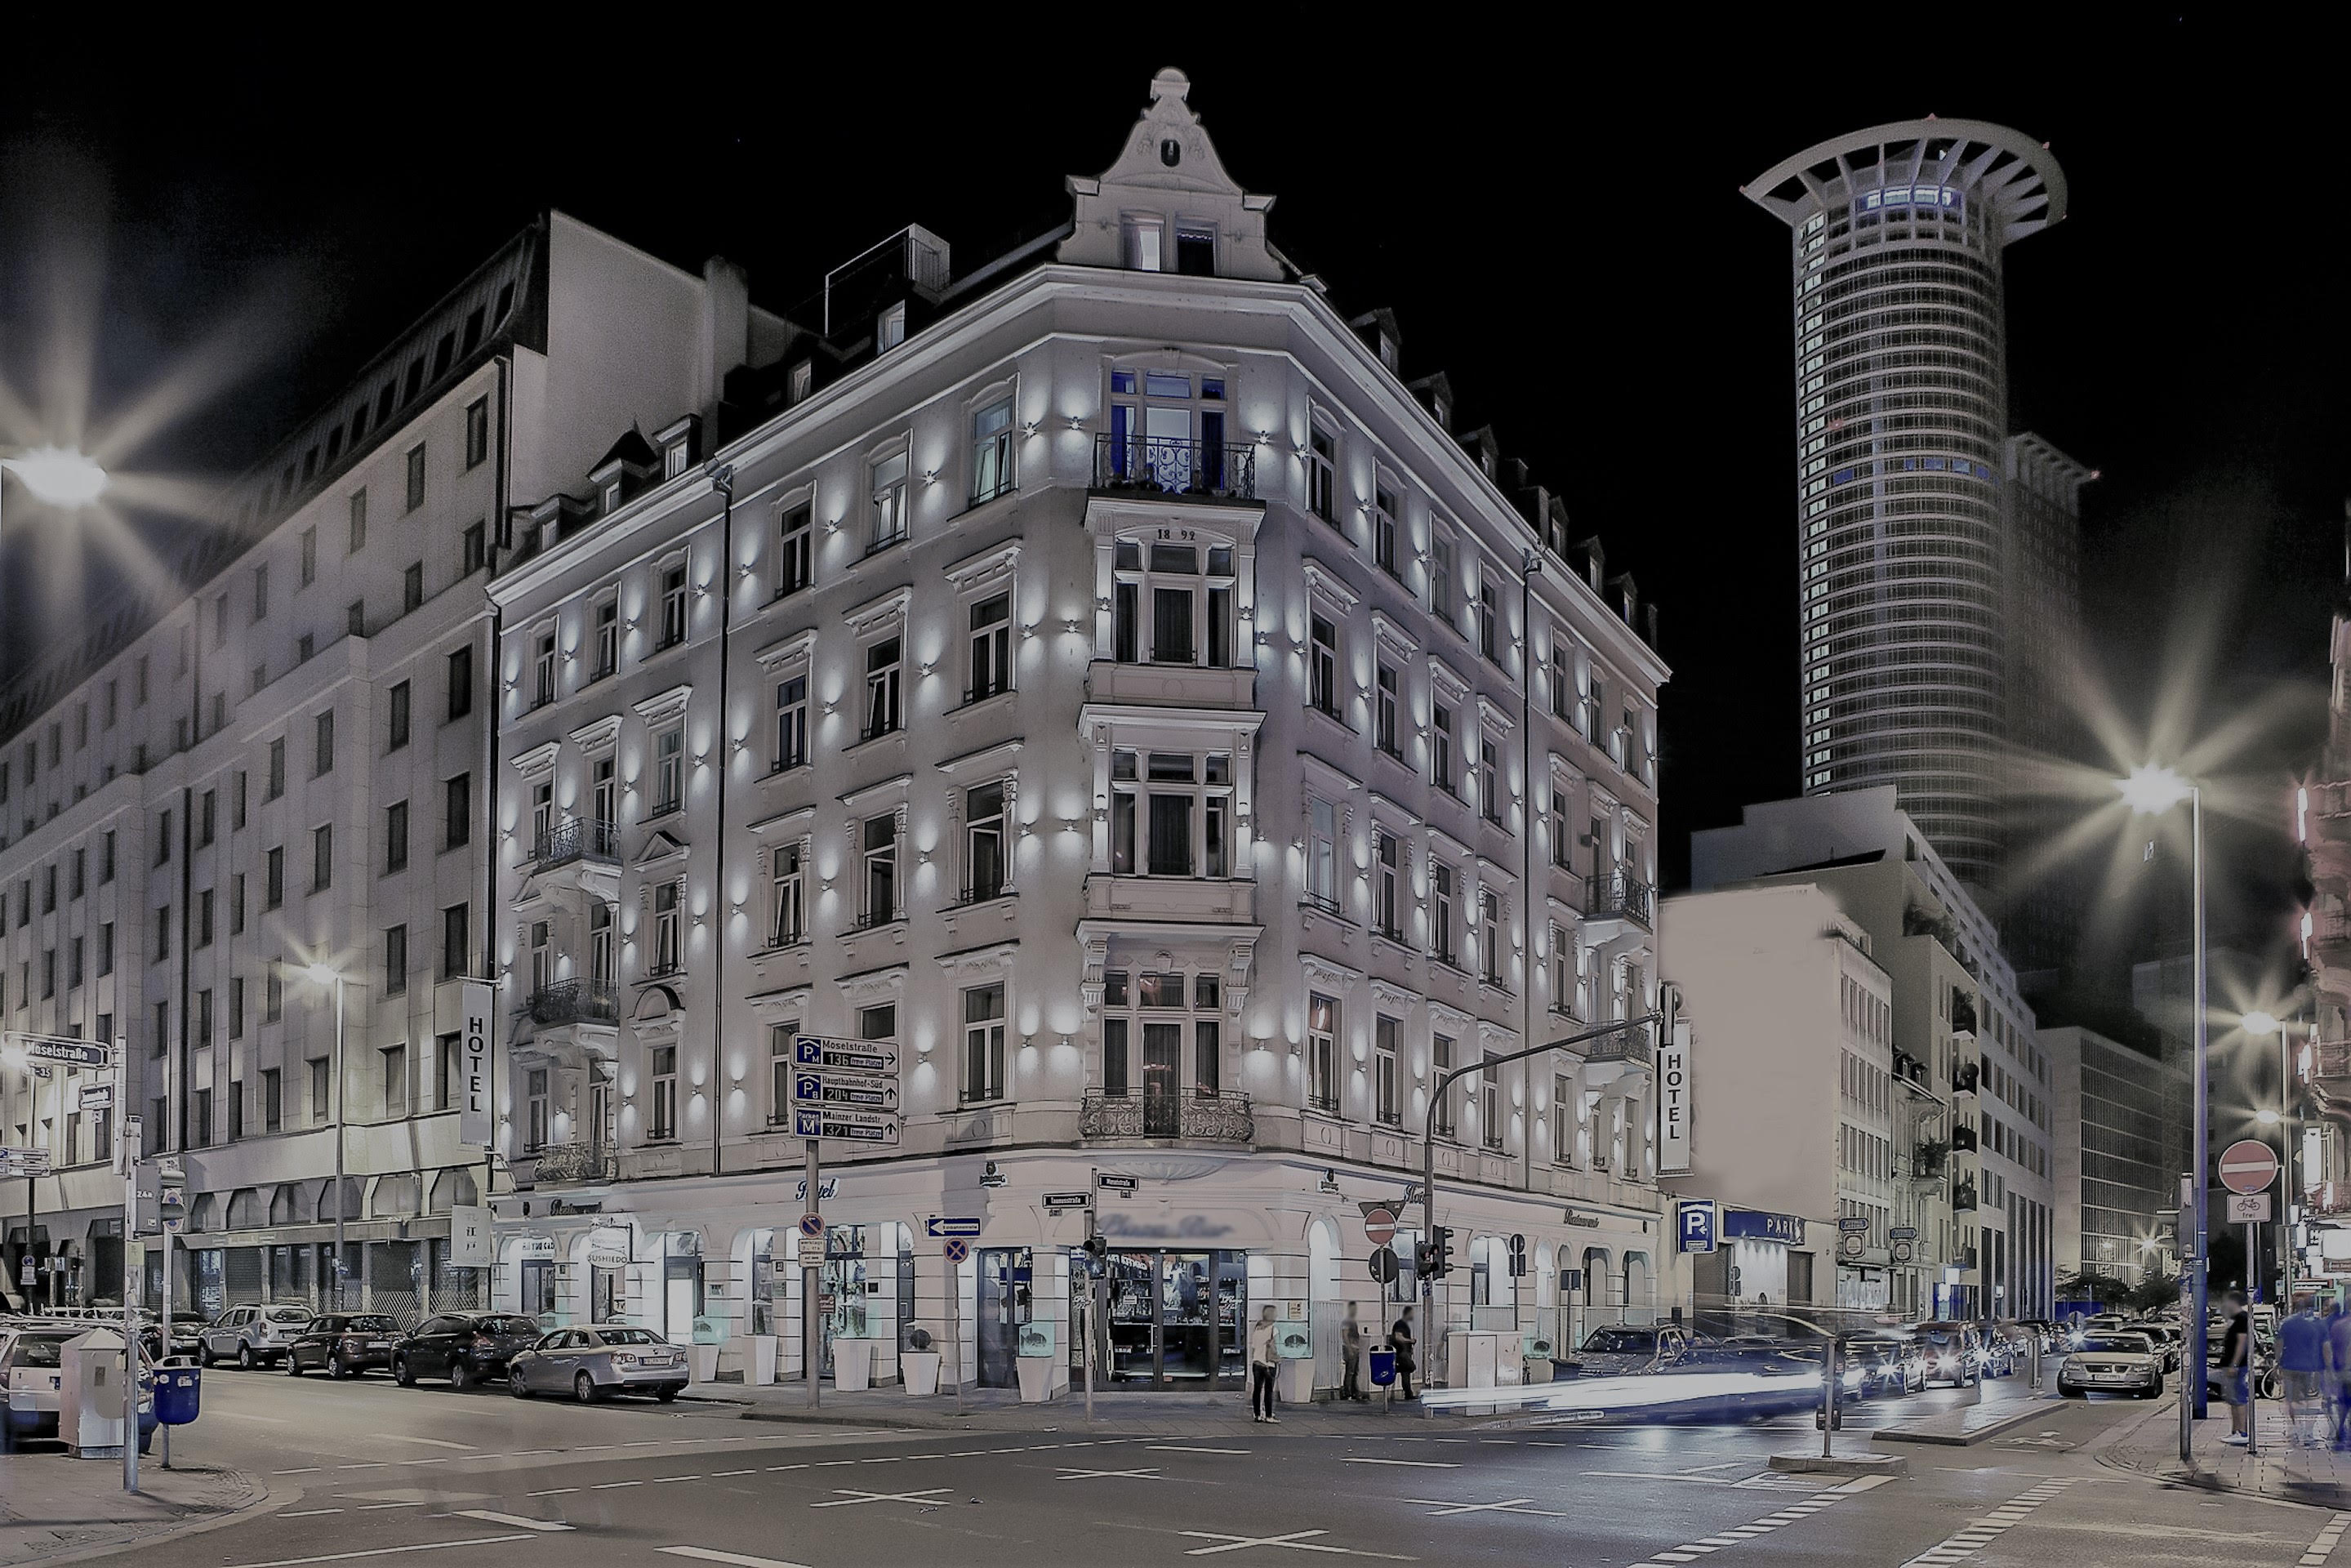 Hotel Downtown – A beautiful hotel in Frankfurt